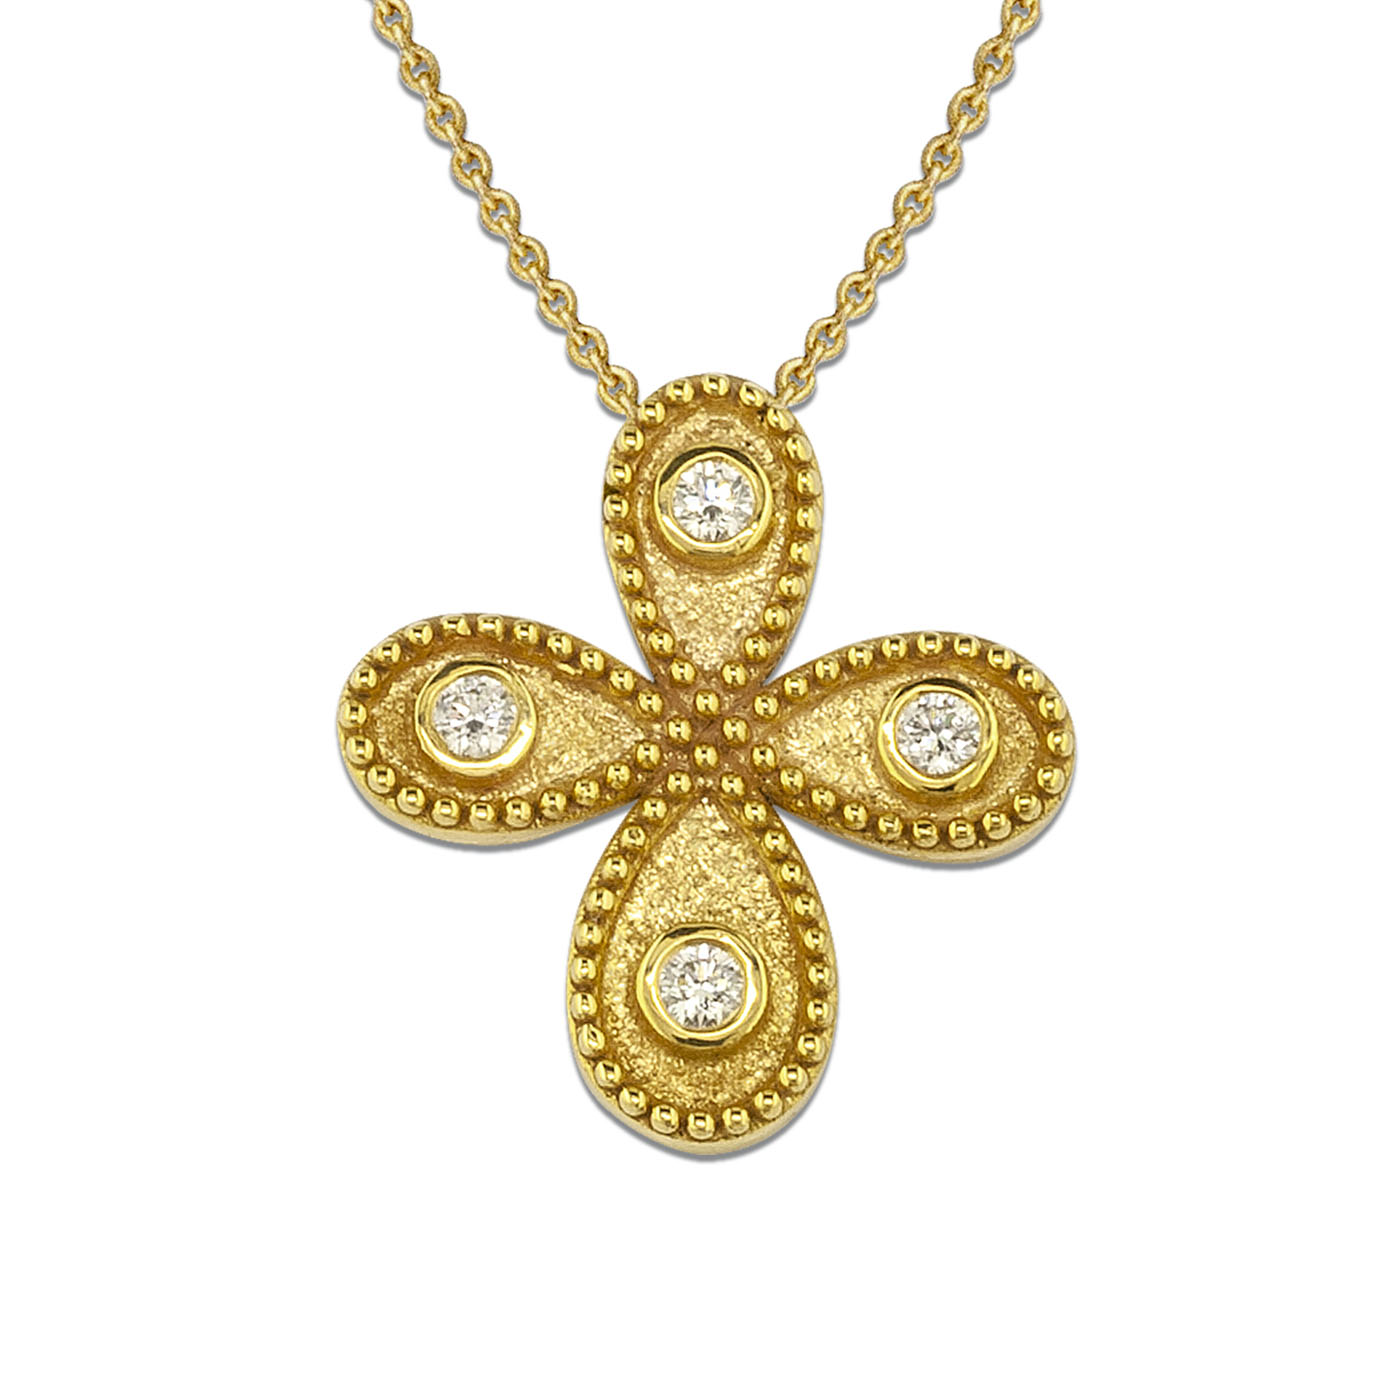 Gold geometric cross pendant with diamonds